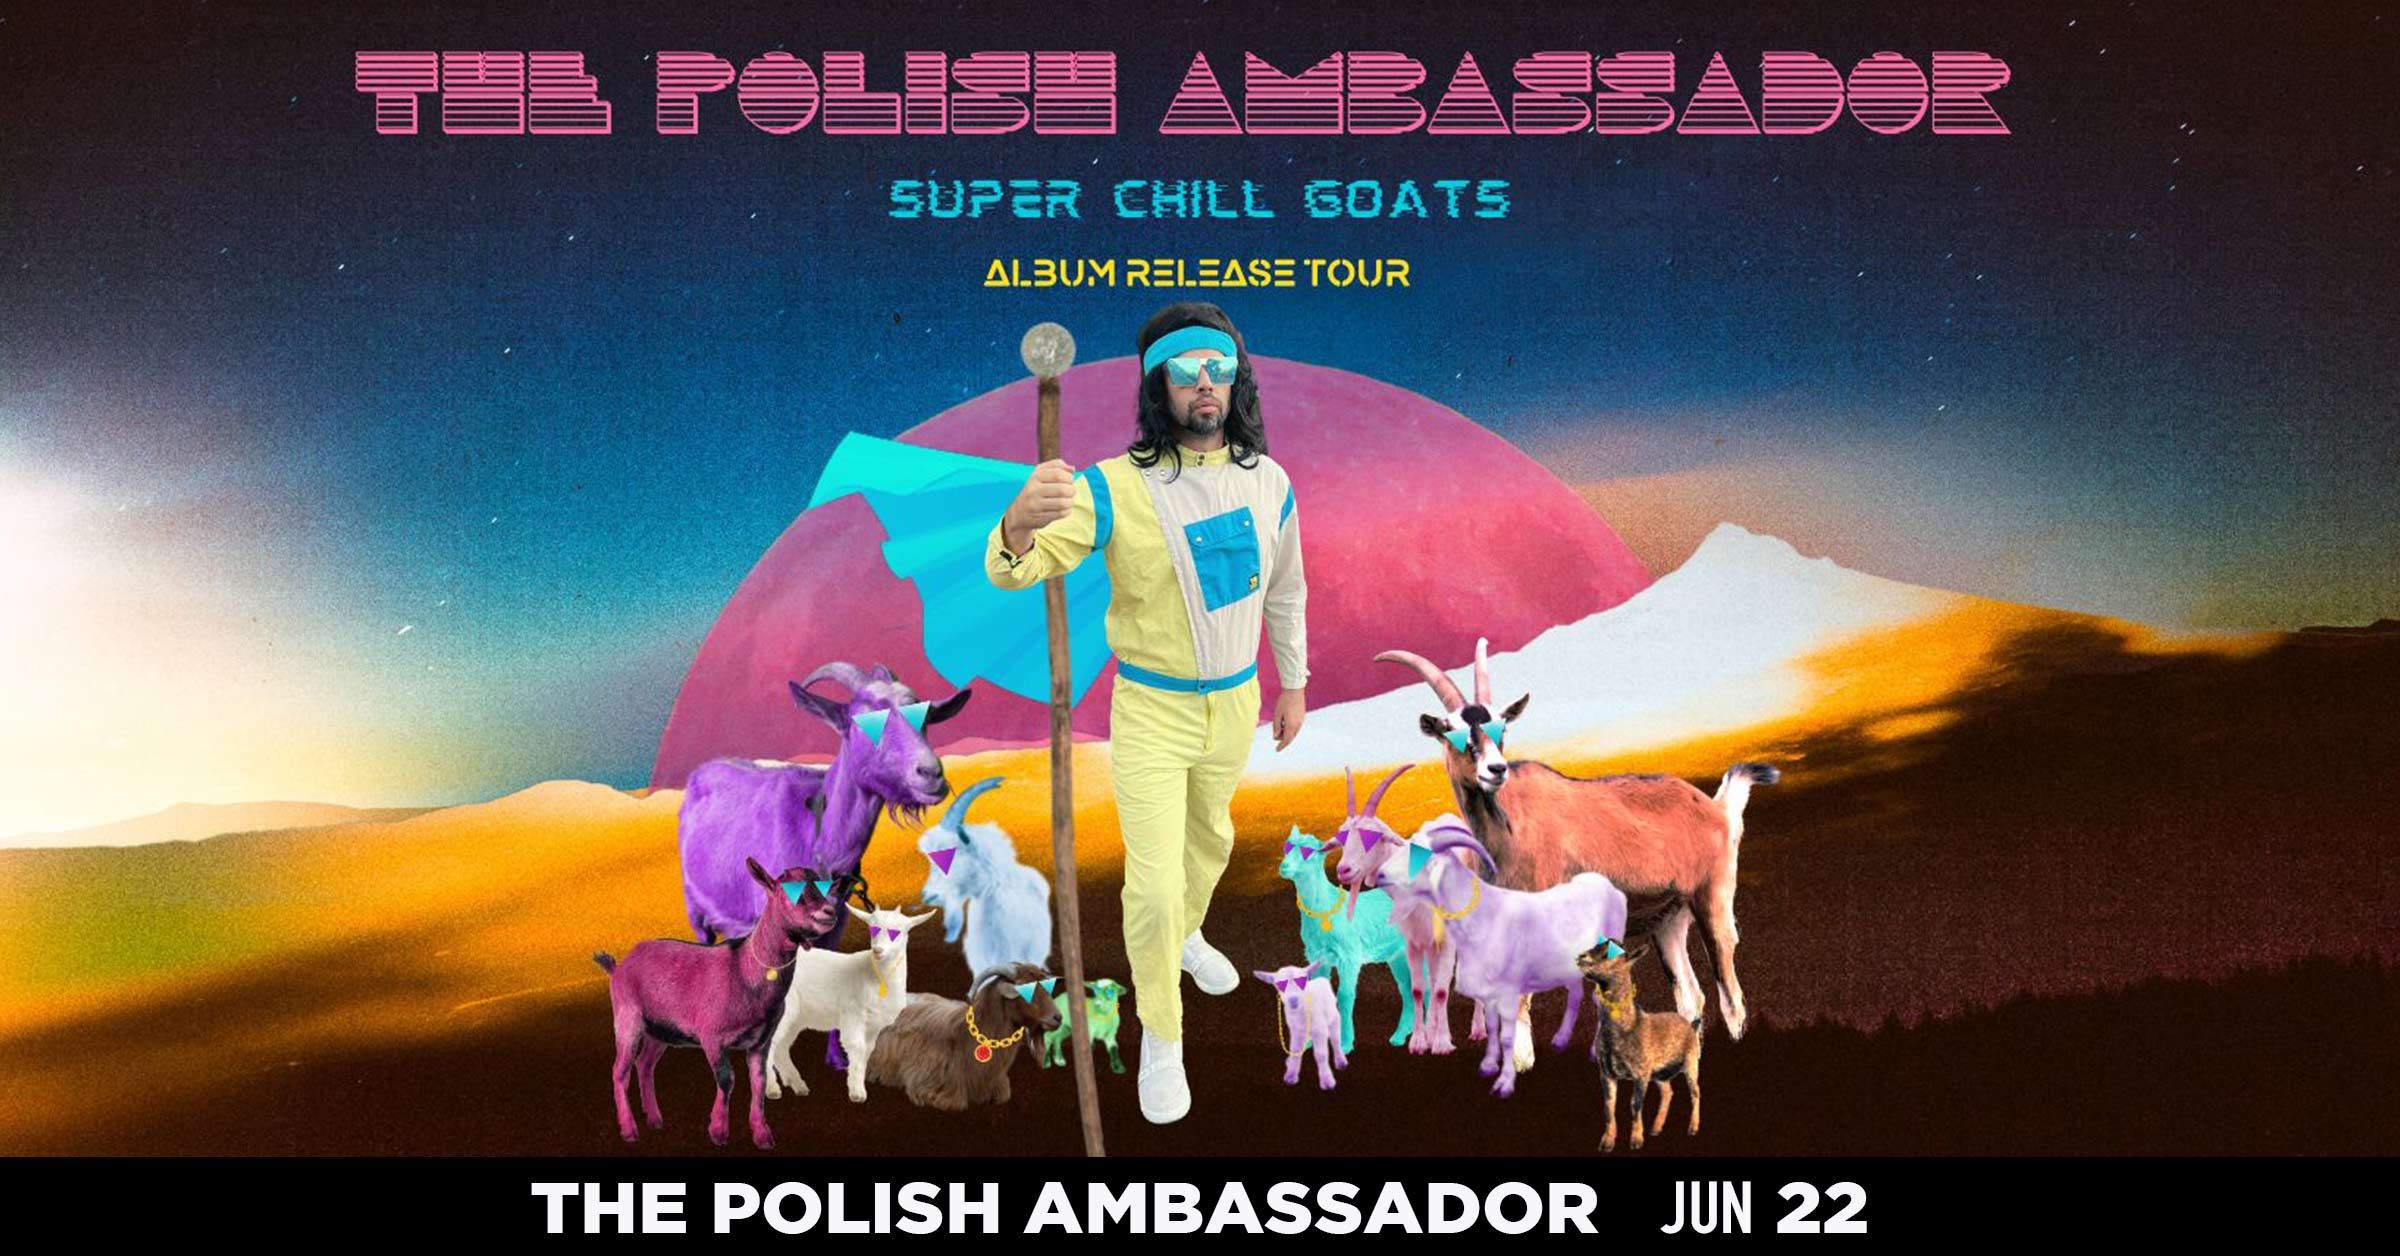 The Polish Ambassador - Jun 22